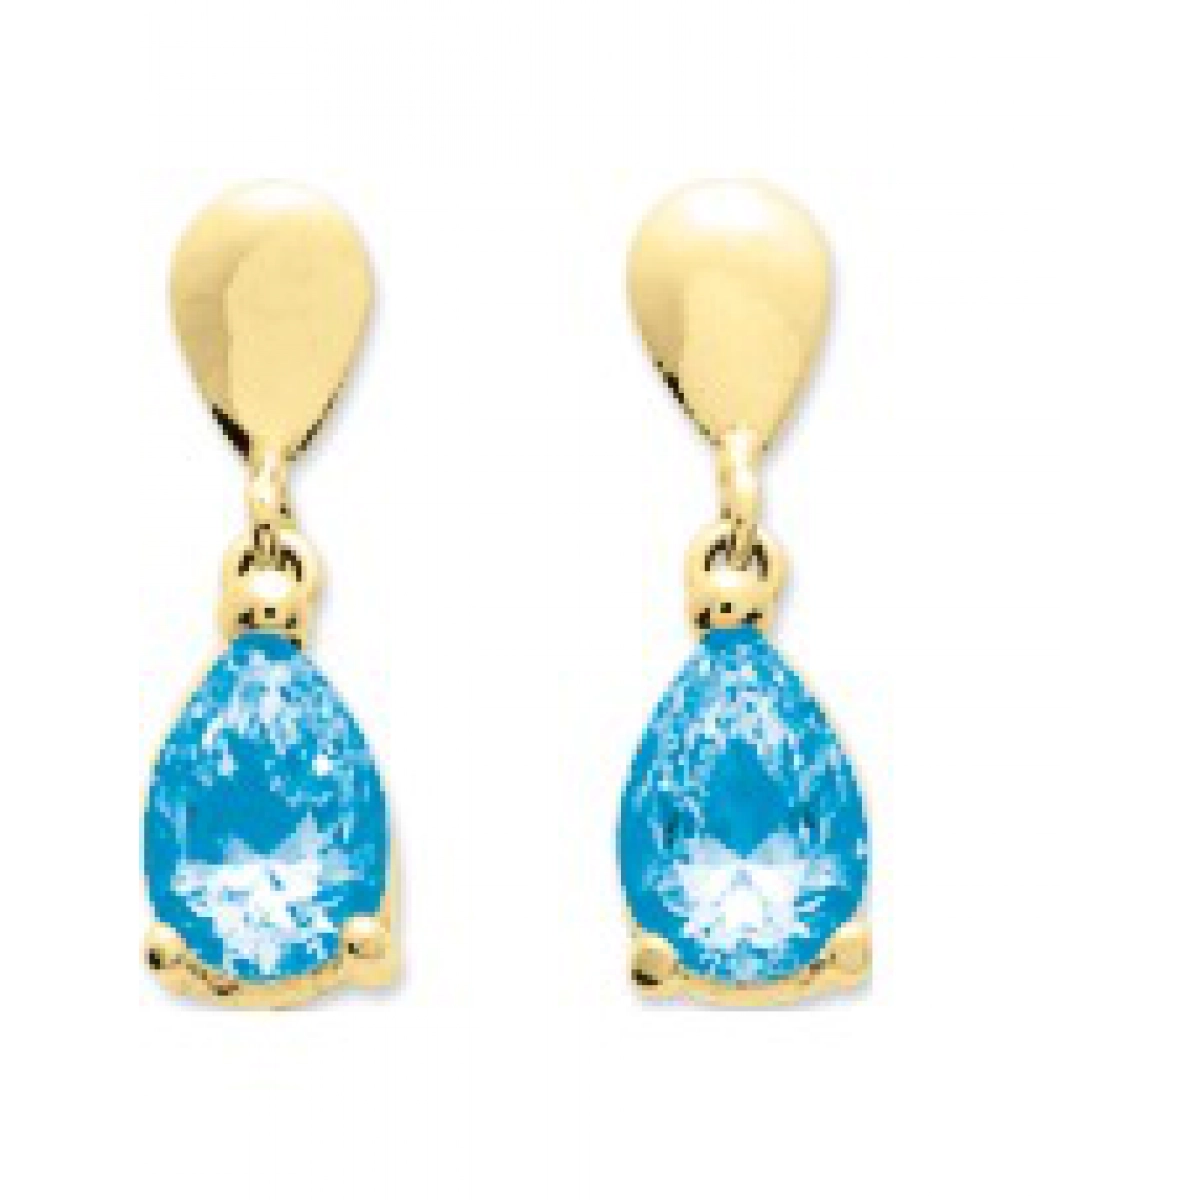 Earrings pair treated Blue Topaz 9K YG  Lua Blanca  293037.T0.0